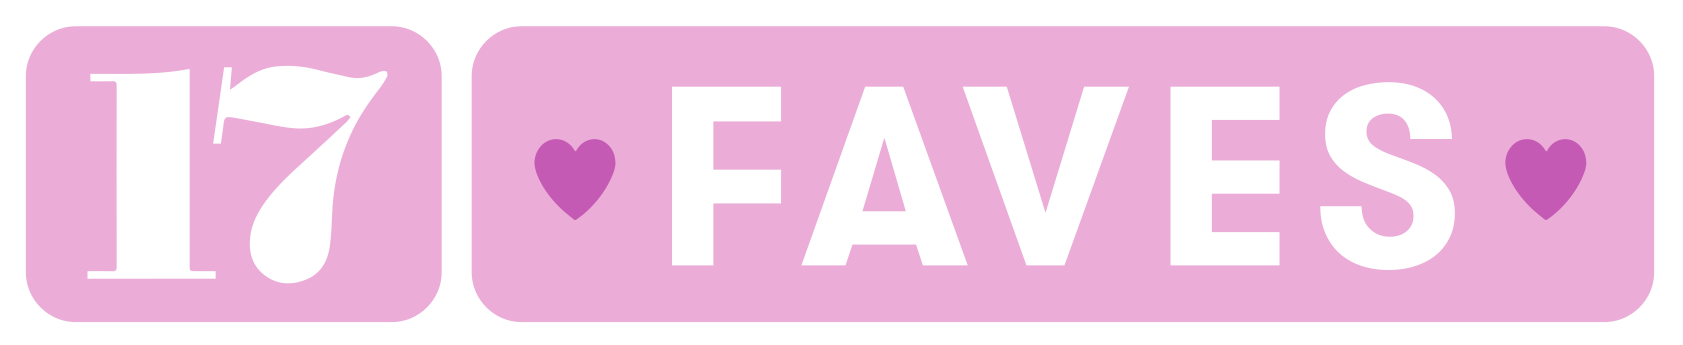 Seventeen Faves Logo